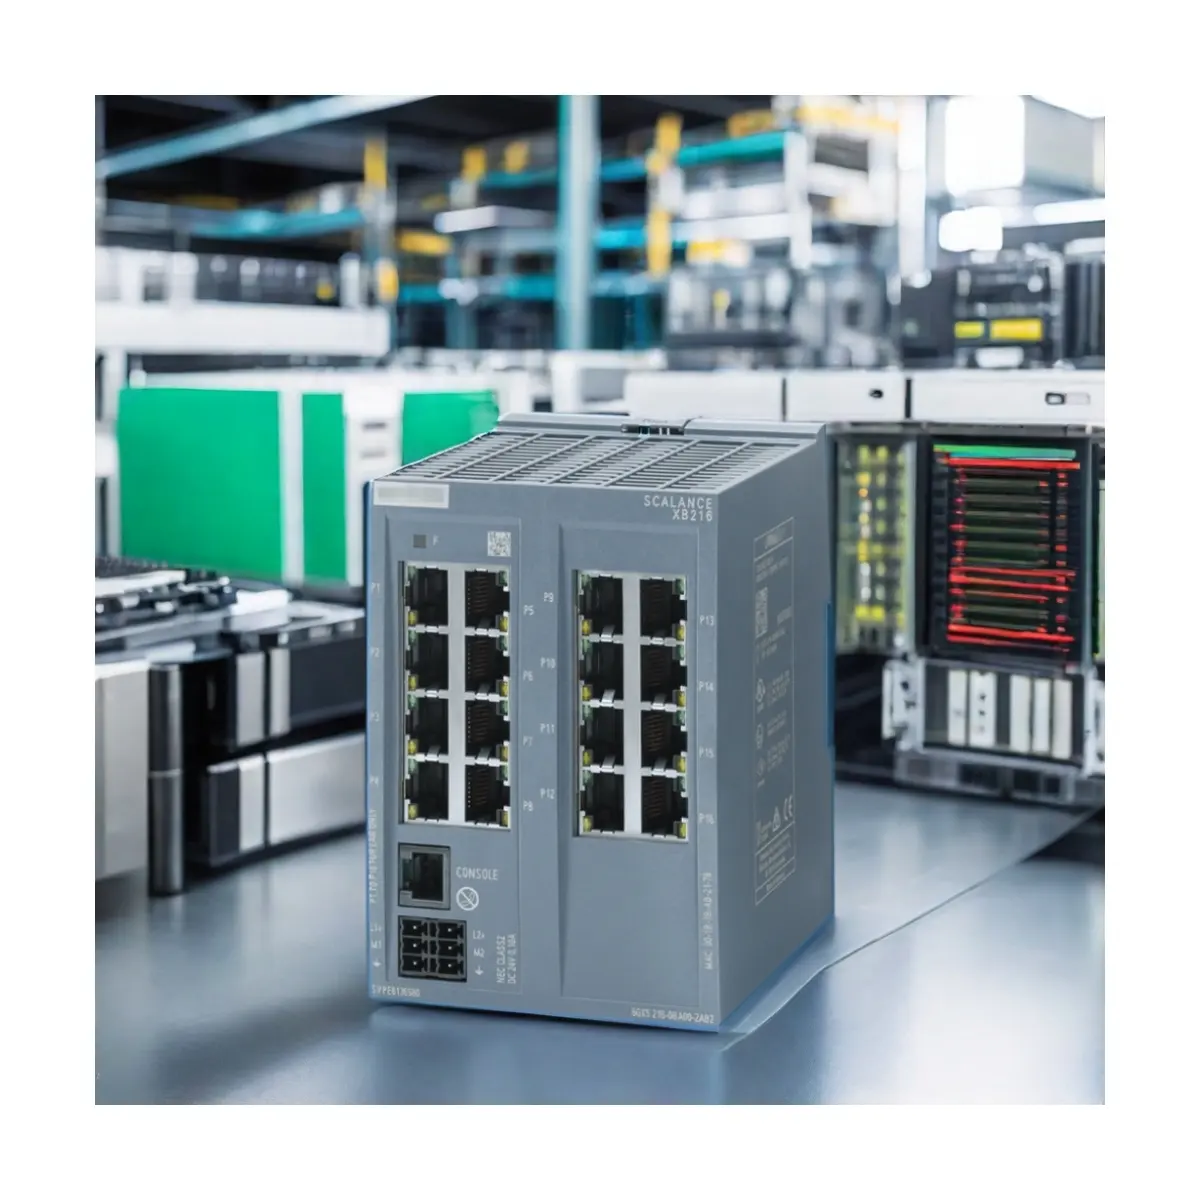 New   Original Siemens SCALANCE XB216 electrical managed Layer 2 IE switch module 6GK5216-0BA00-2AB2